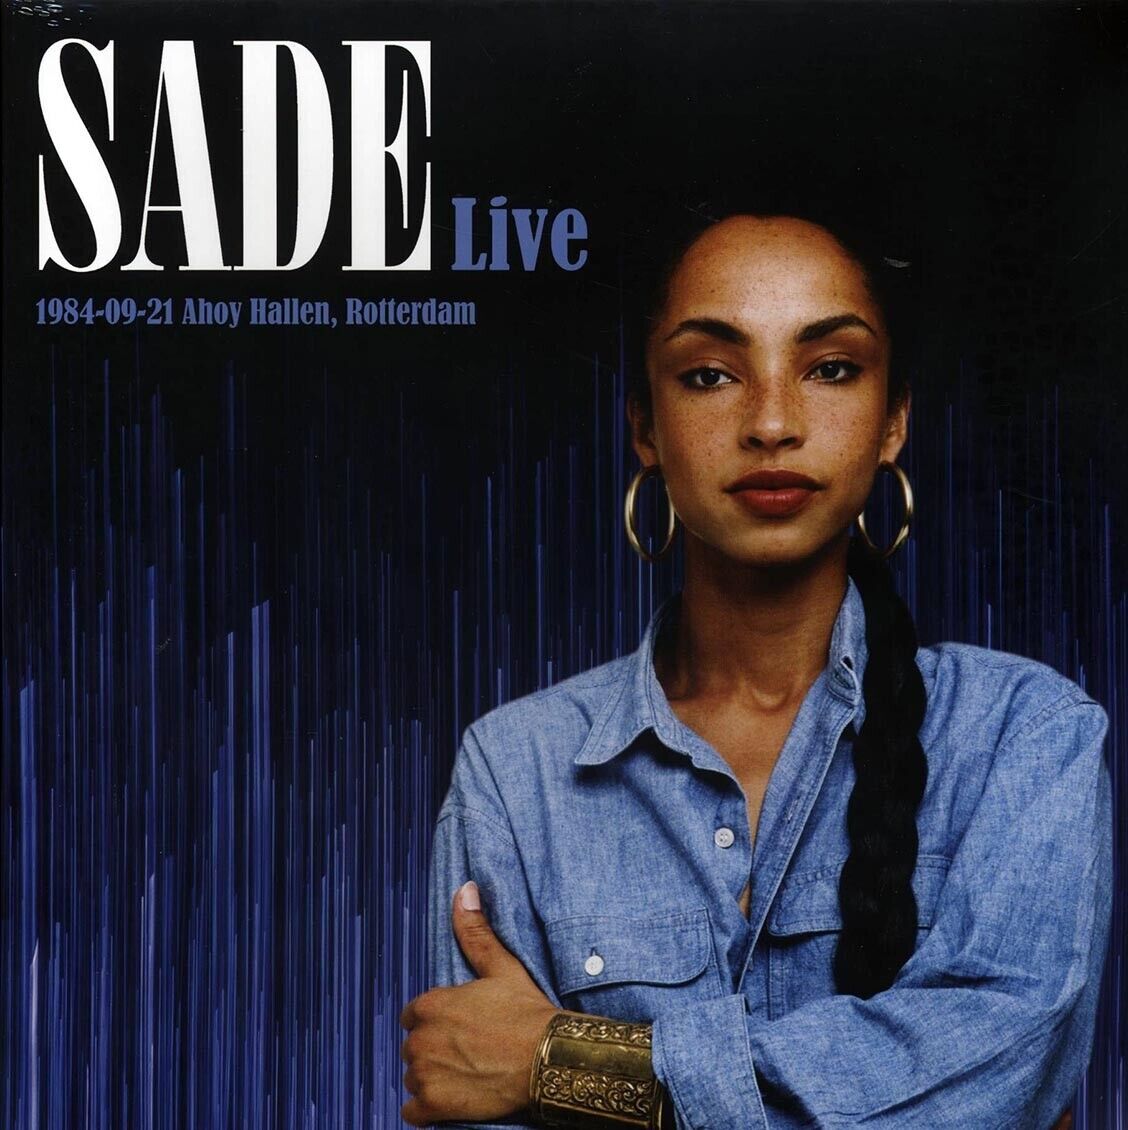 SADE Live 1984-09-21 Ahoy Hallen, Rotterdam 2LP Limited Edition